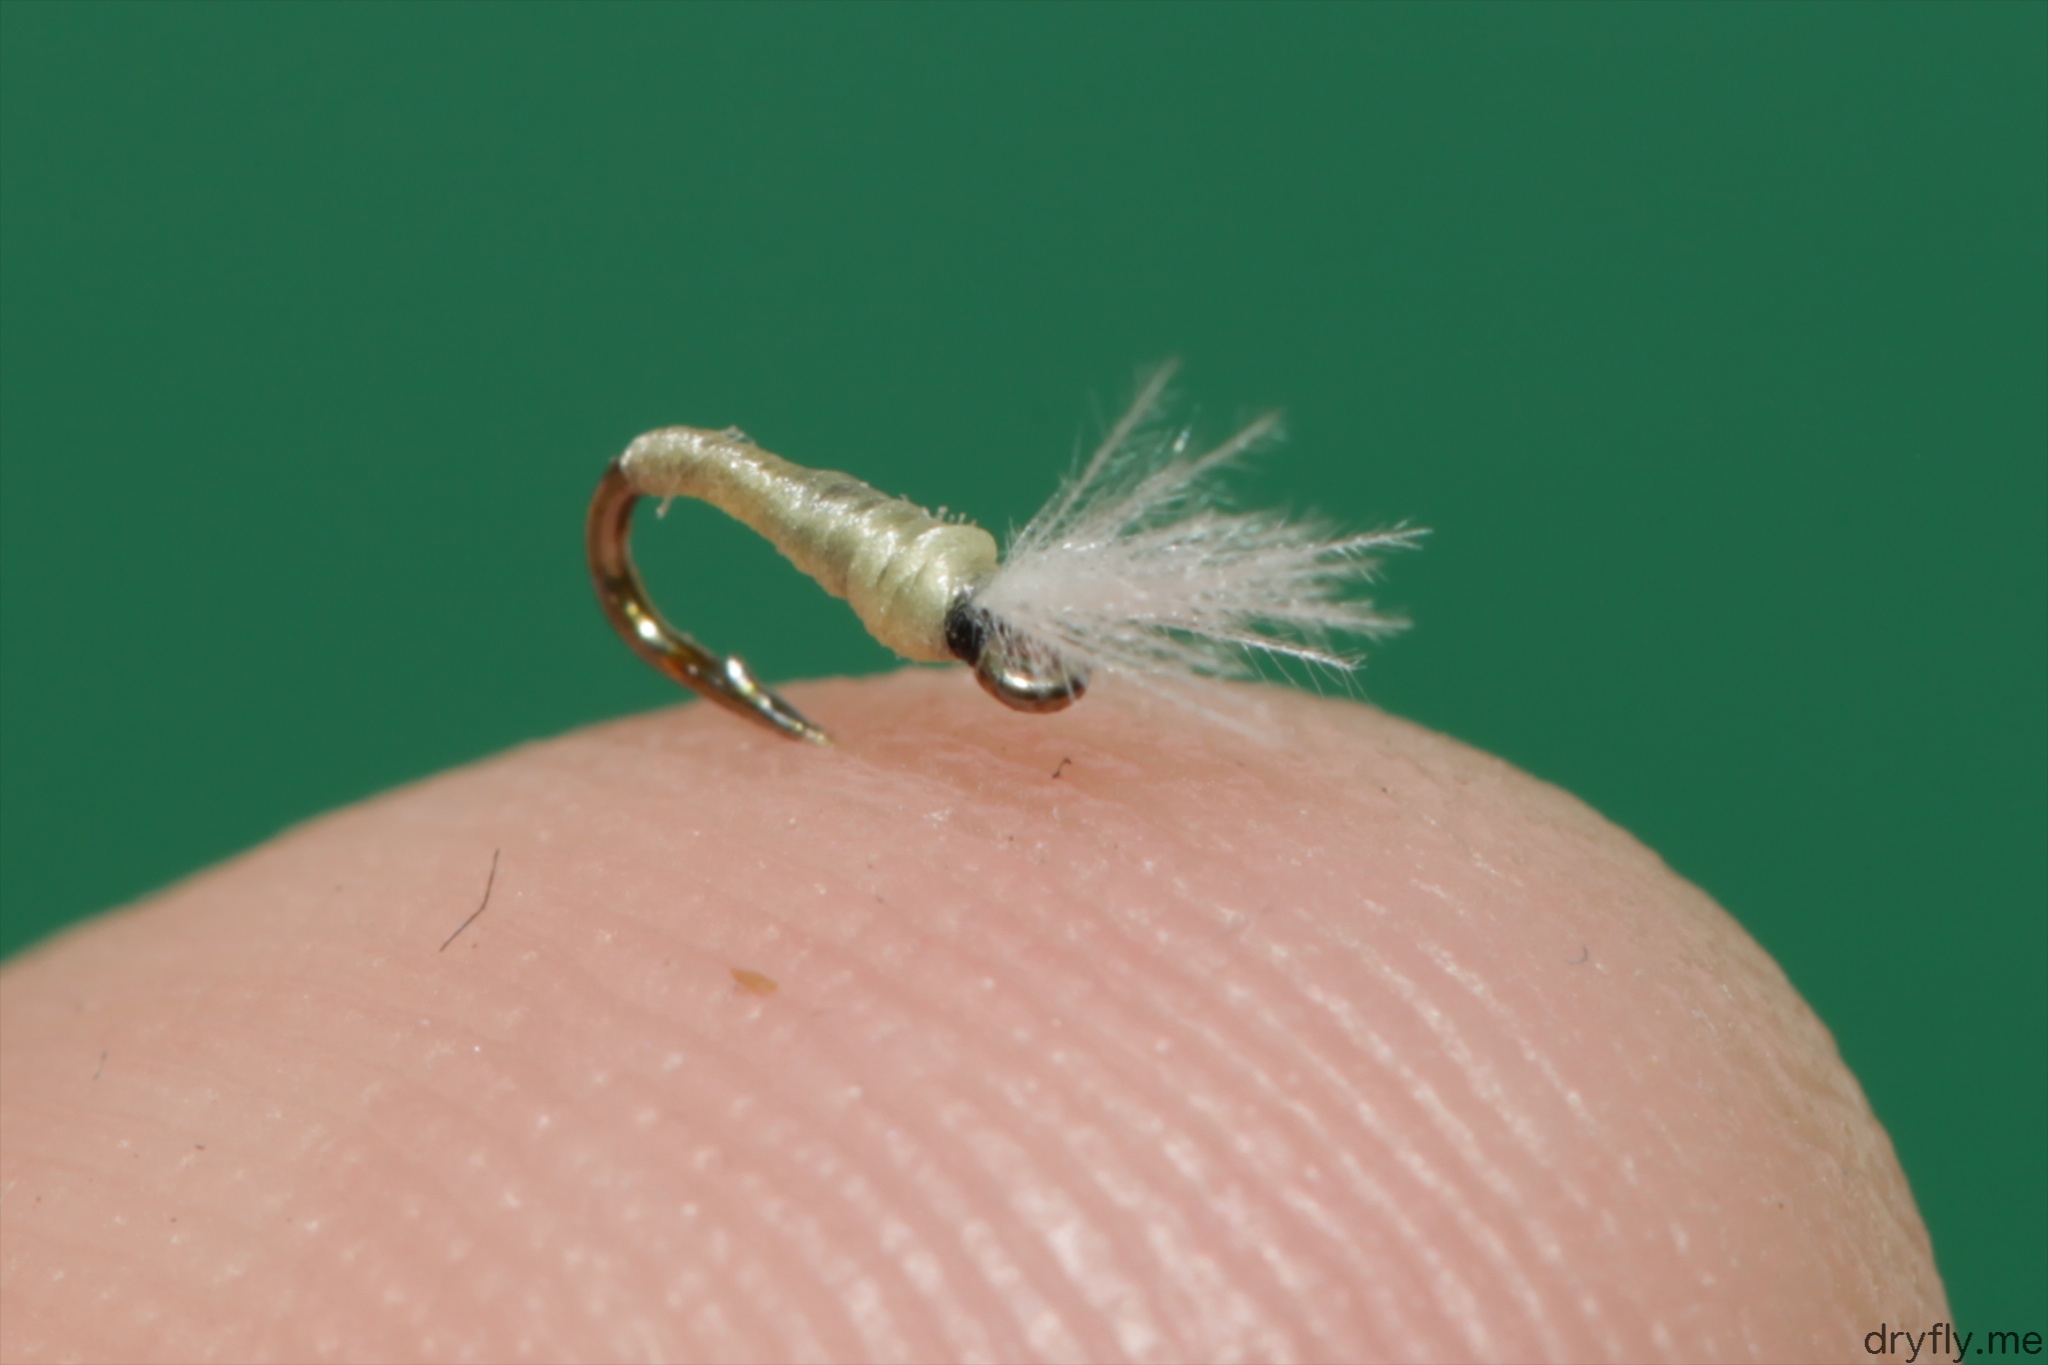 http://dryfly.me/wp-content/uploads/2013/04/2013.04.dryfly.me_.32_tiny_midge_adult_upright_finger.jpg